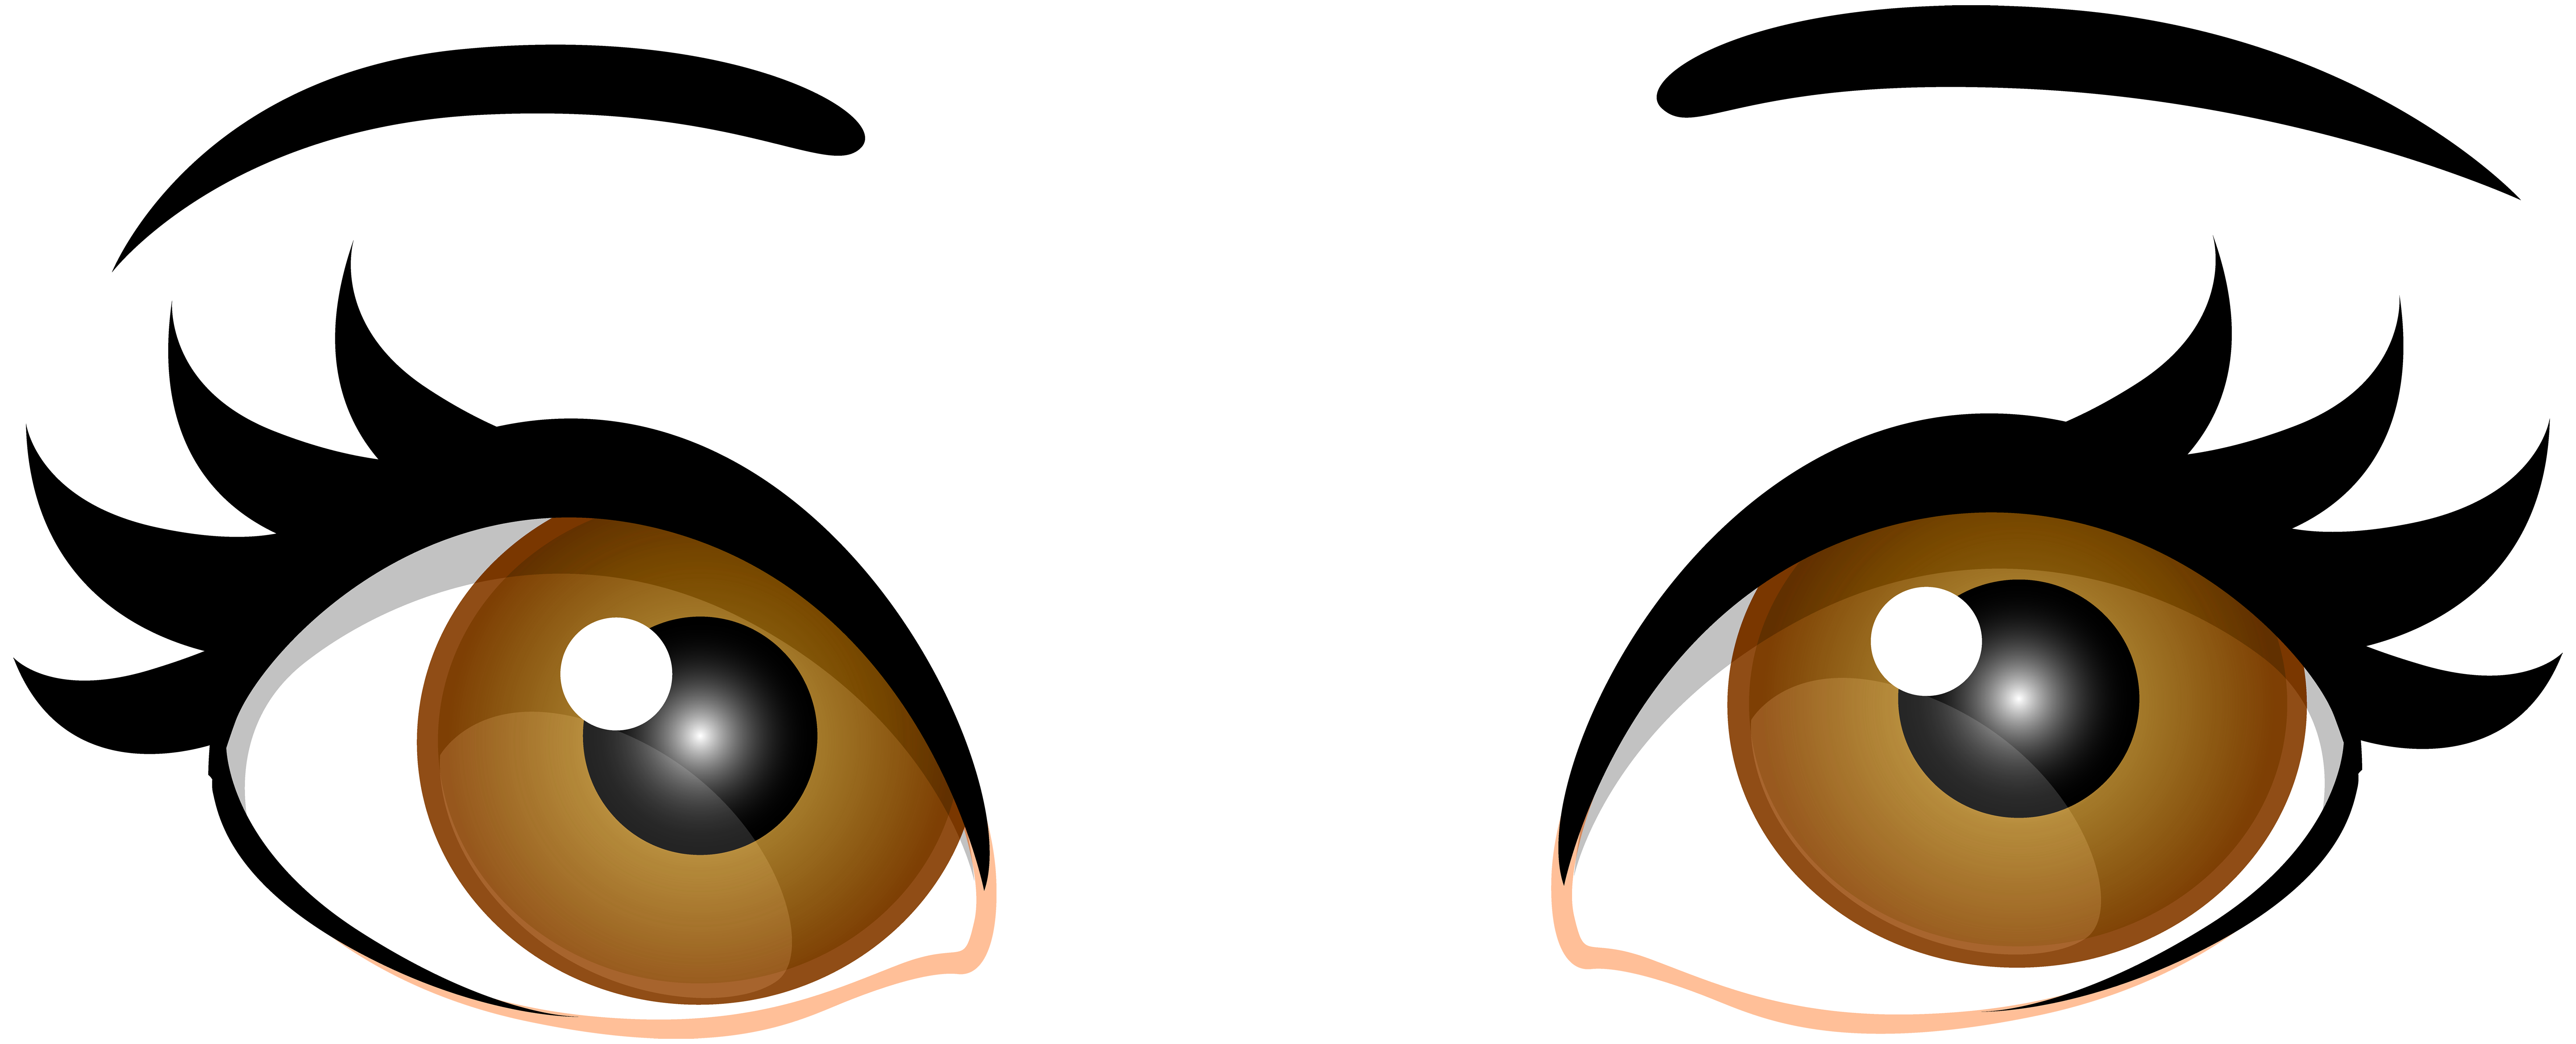 20 Brown eyes clip art for free download on Premium art.